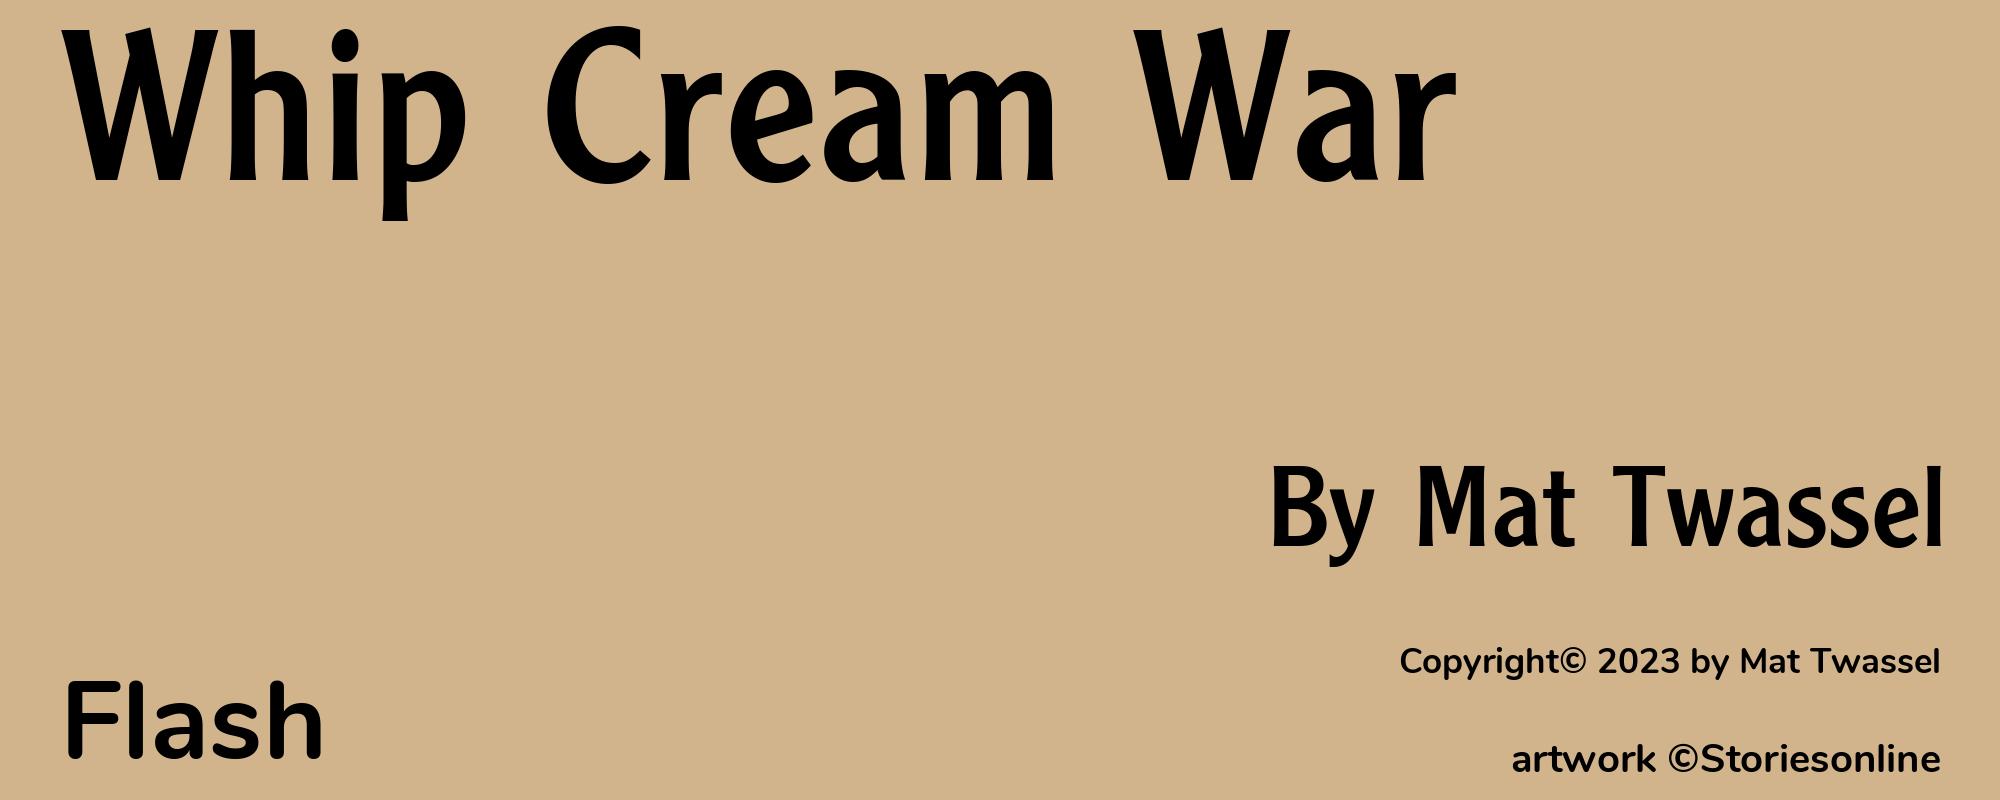 Whip Cream War - Cover